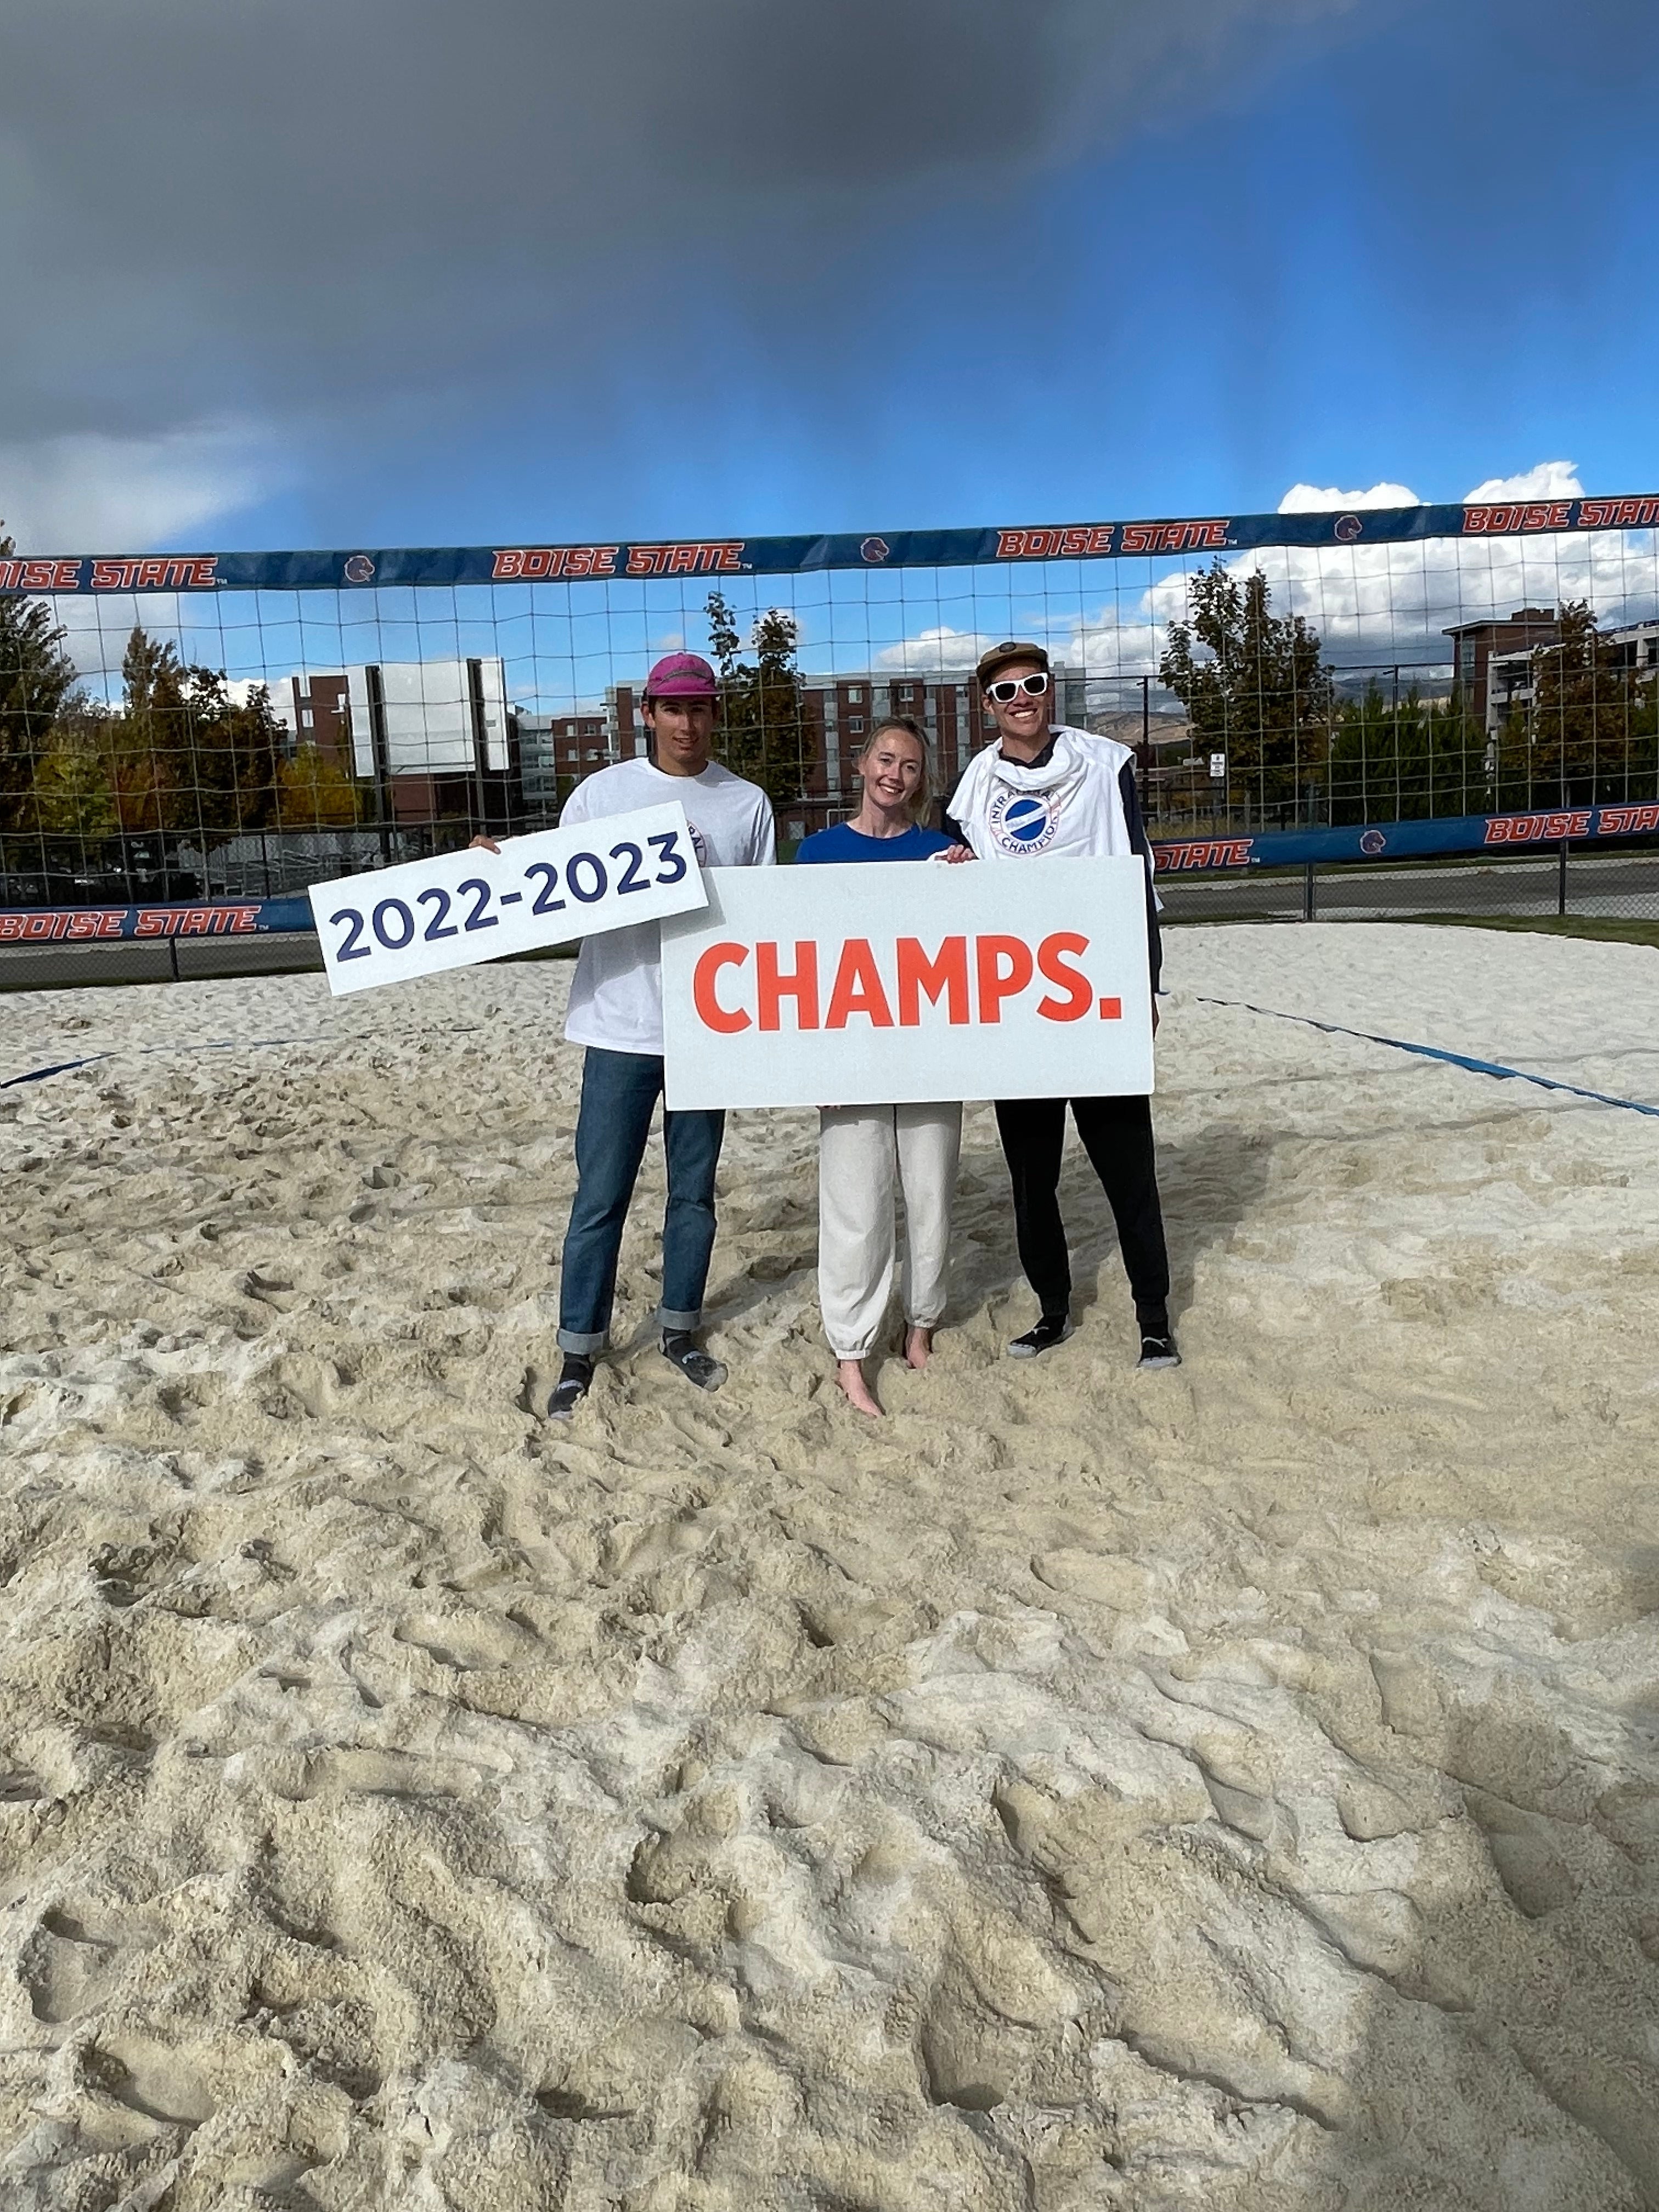 Fall 2022, 4v4 Sand Volleyball, CoRec Blue, I'd 